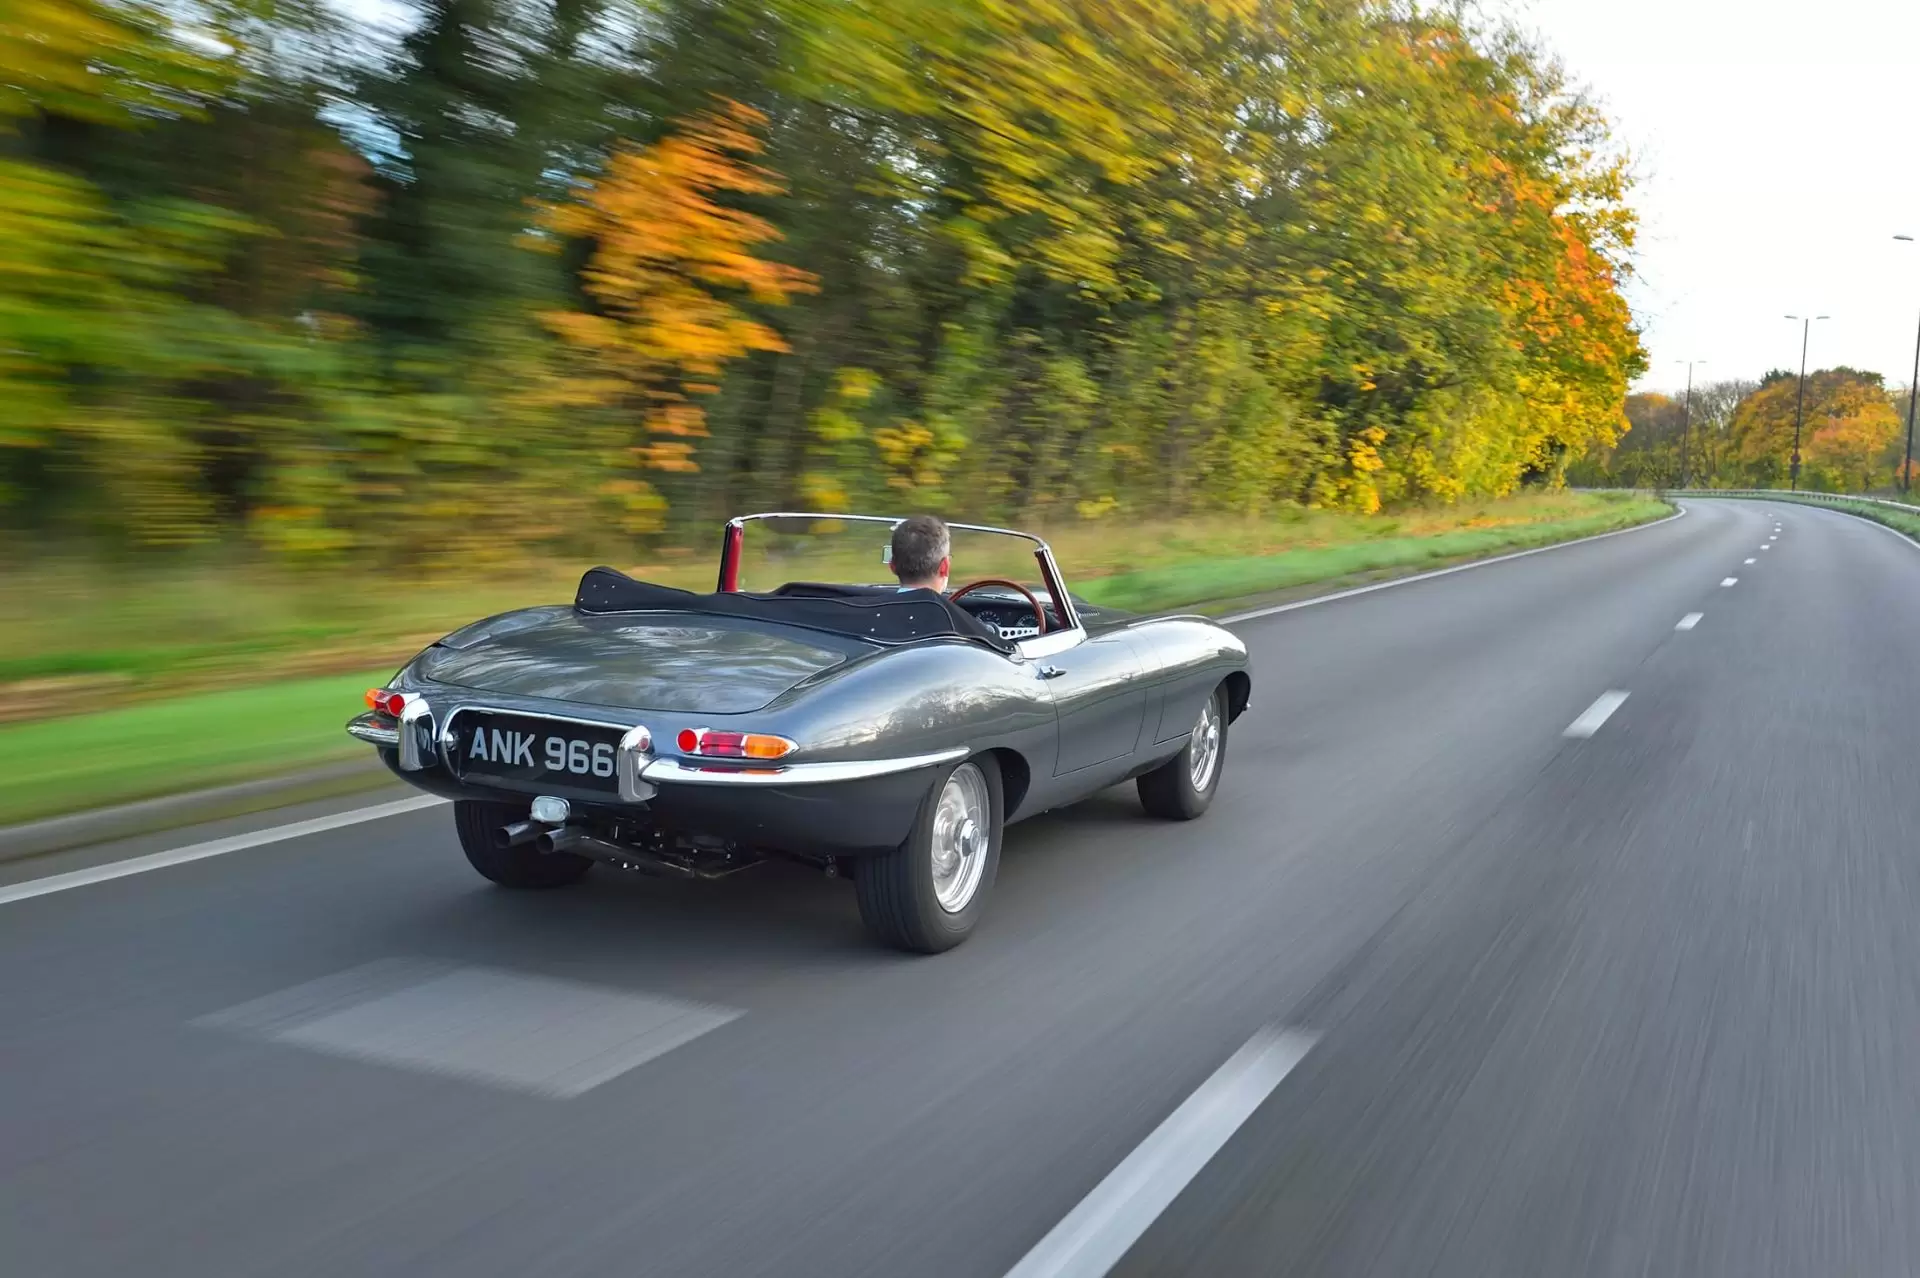 Jaguar classic car driving on the road